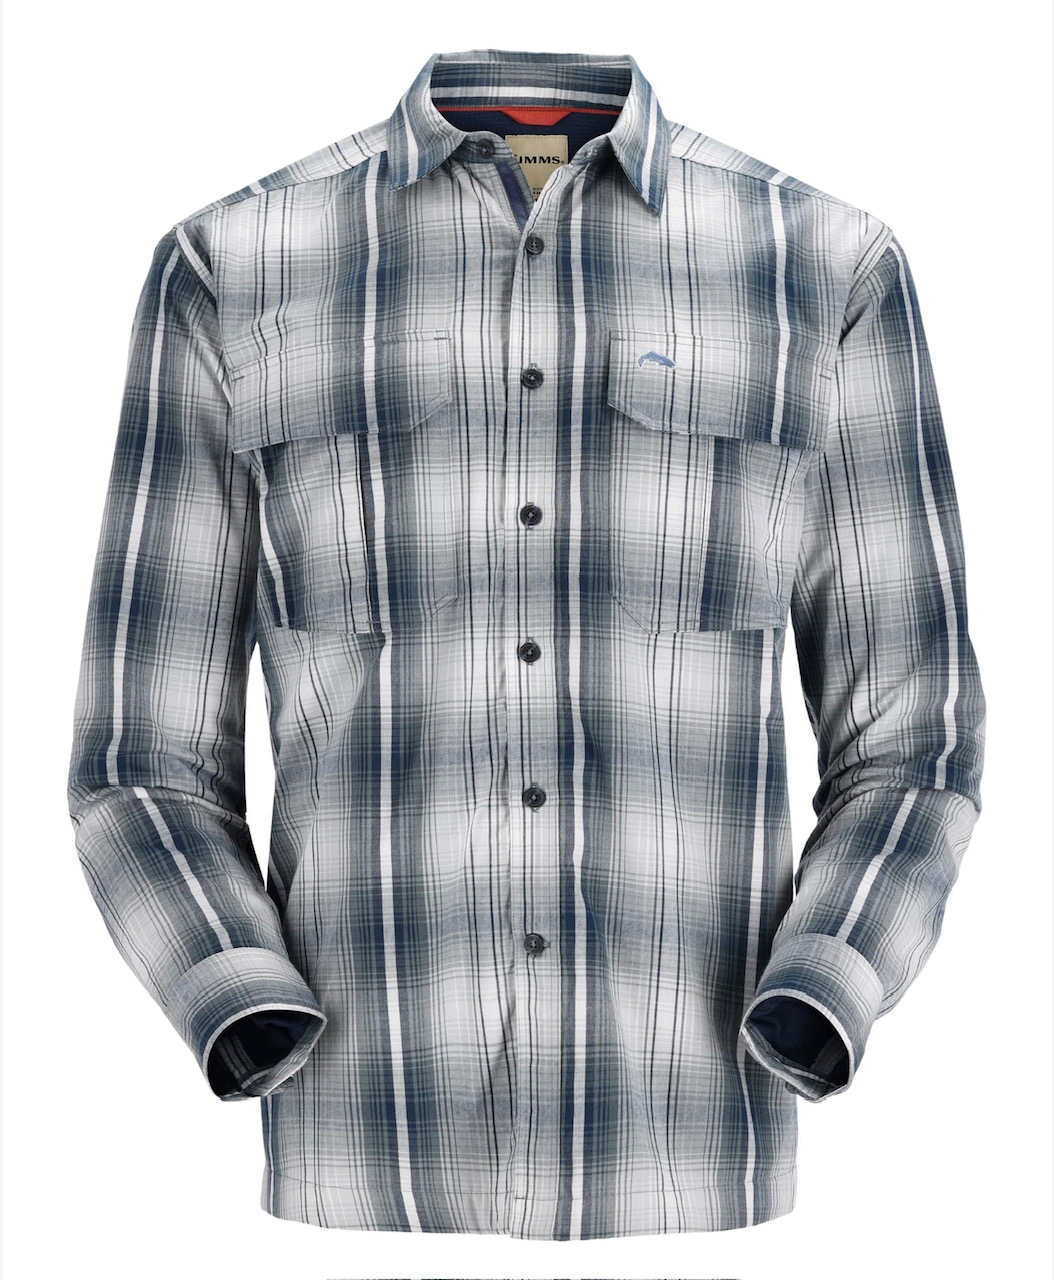 Simms M's Coldweather Shirt - Navy Sterling Plaid - XL